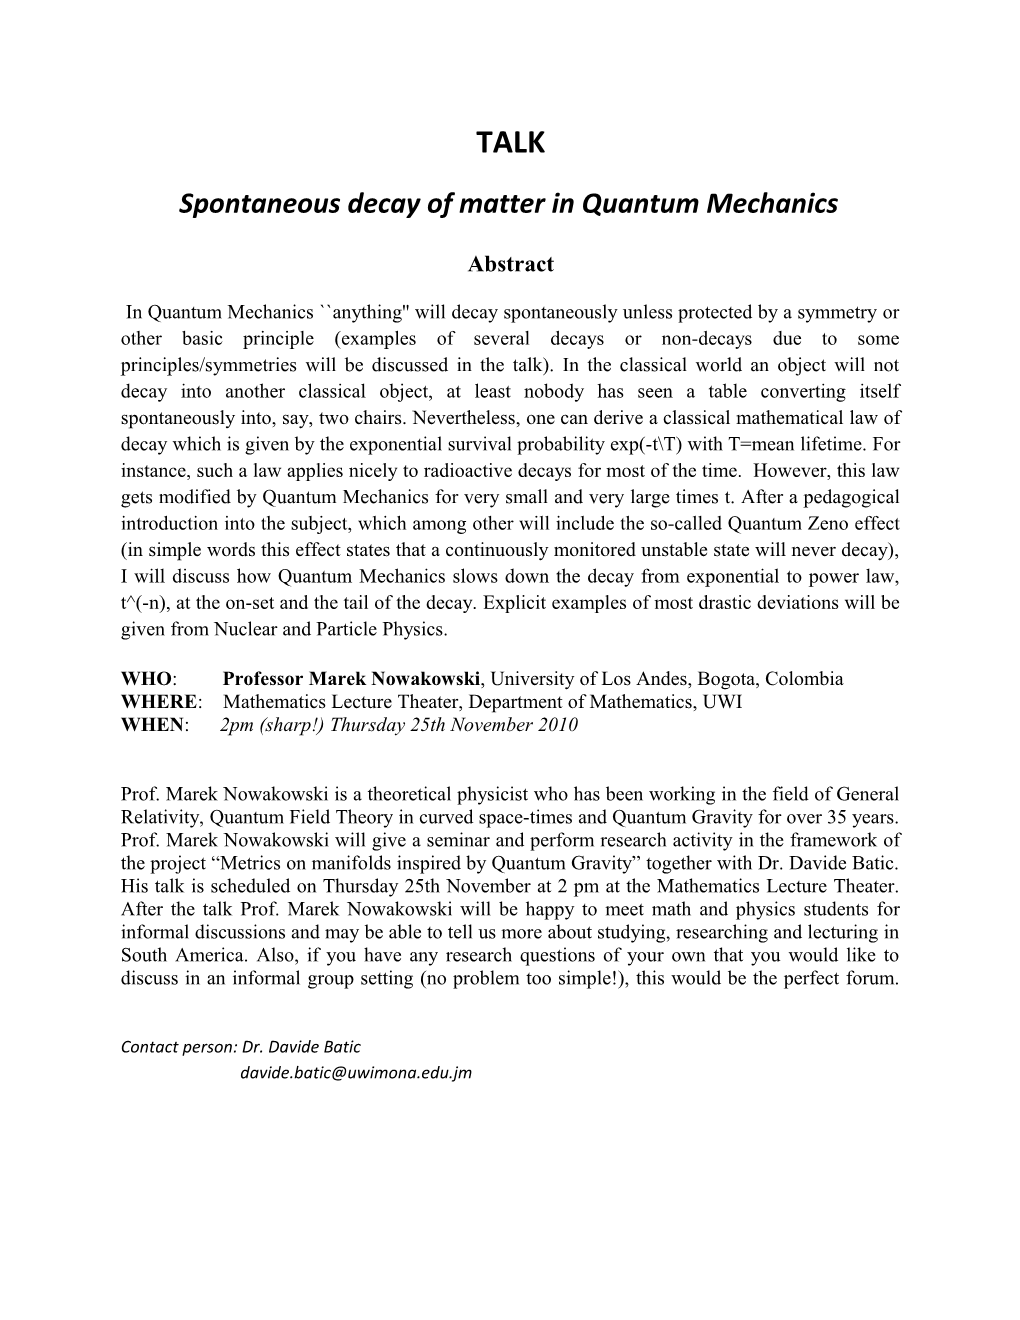 Spontaneous Decay of Matter in Quantum Mechanics